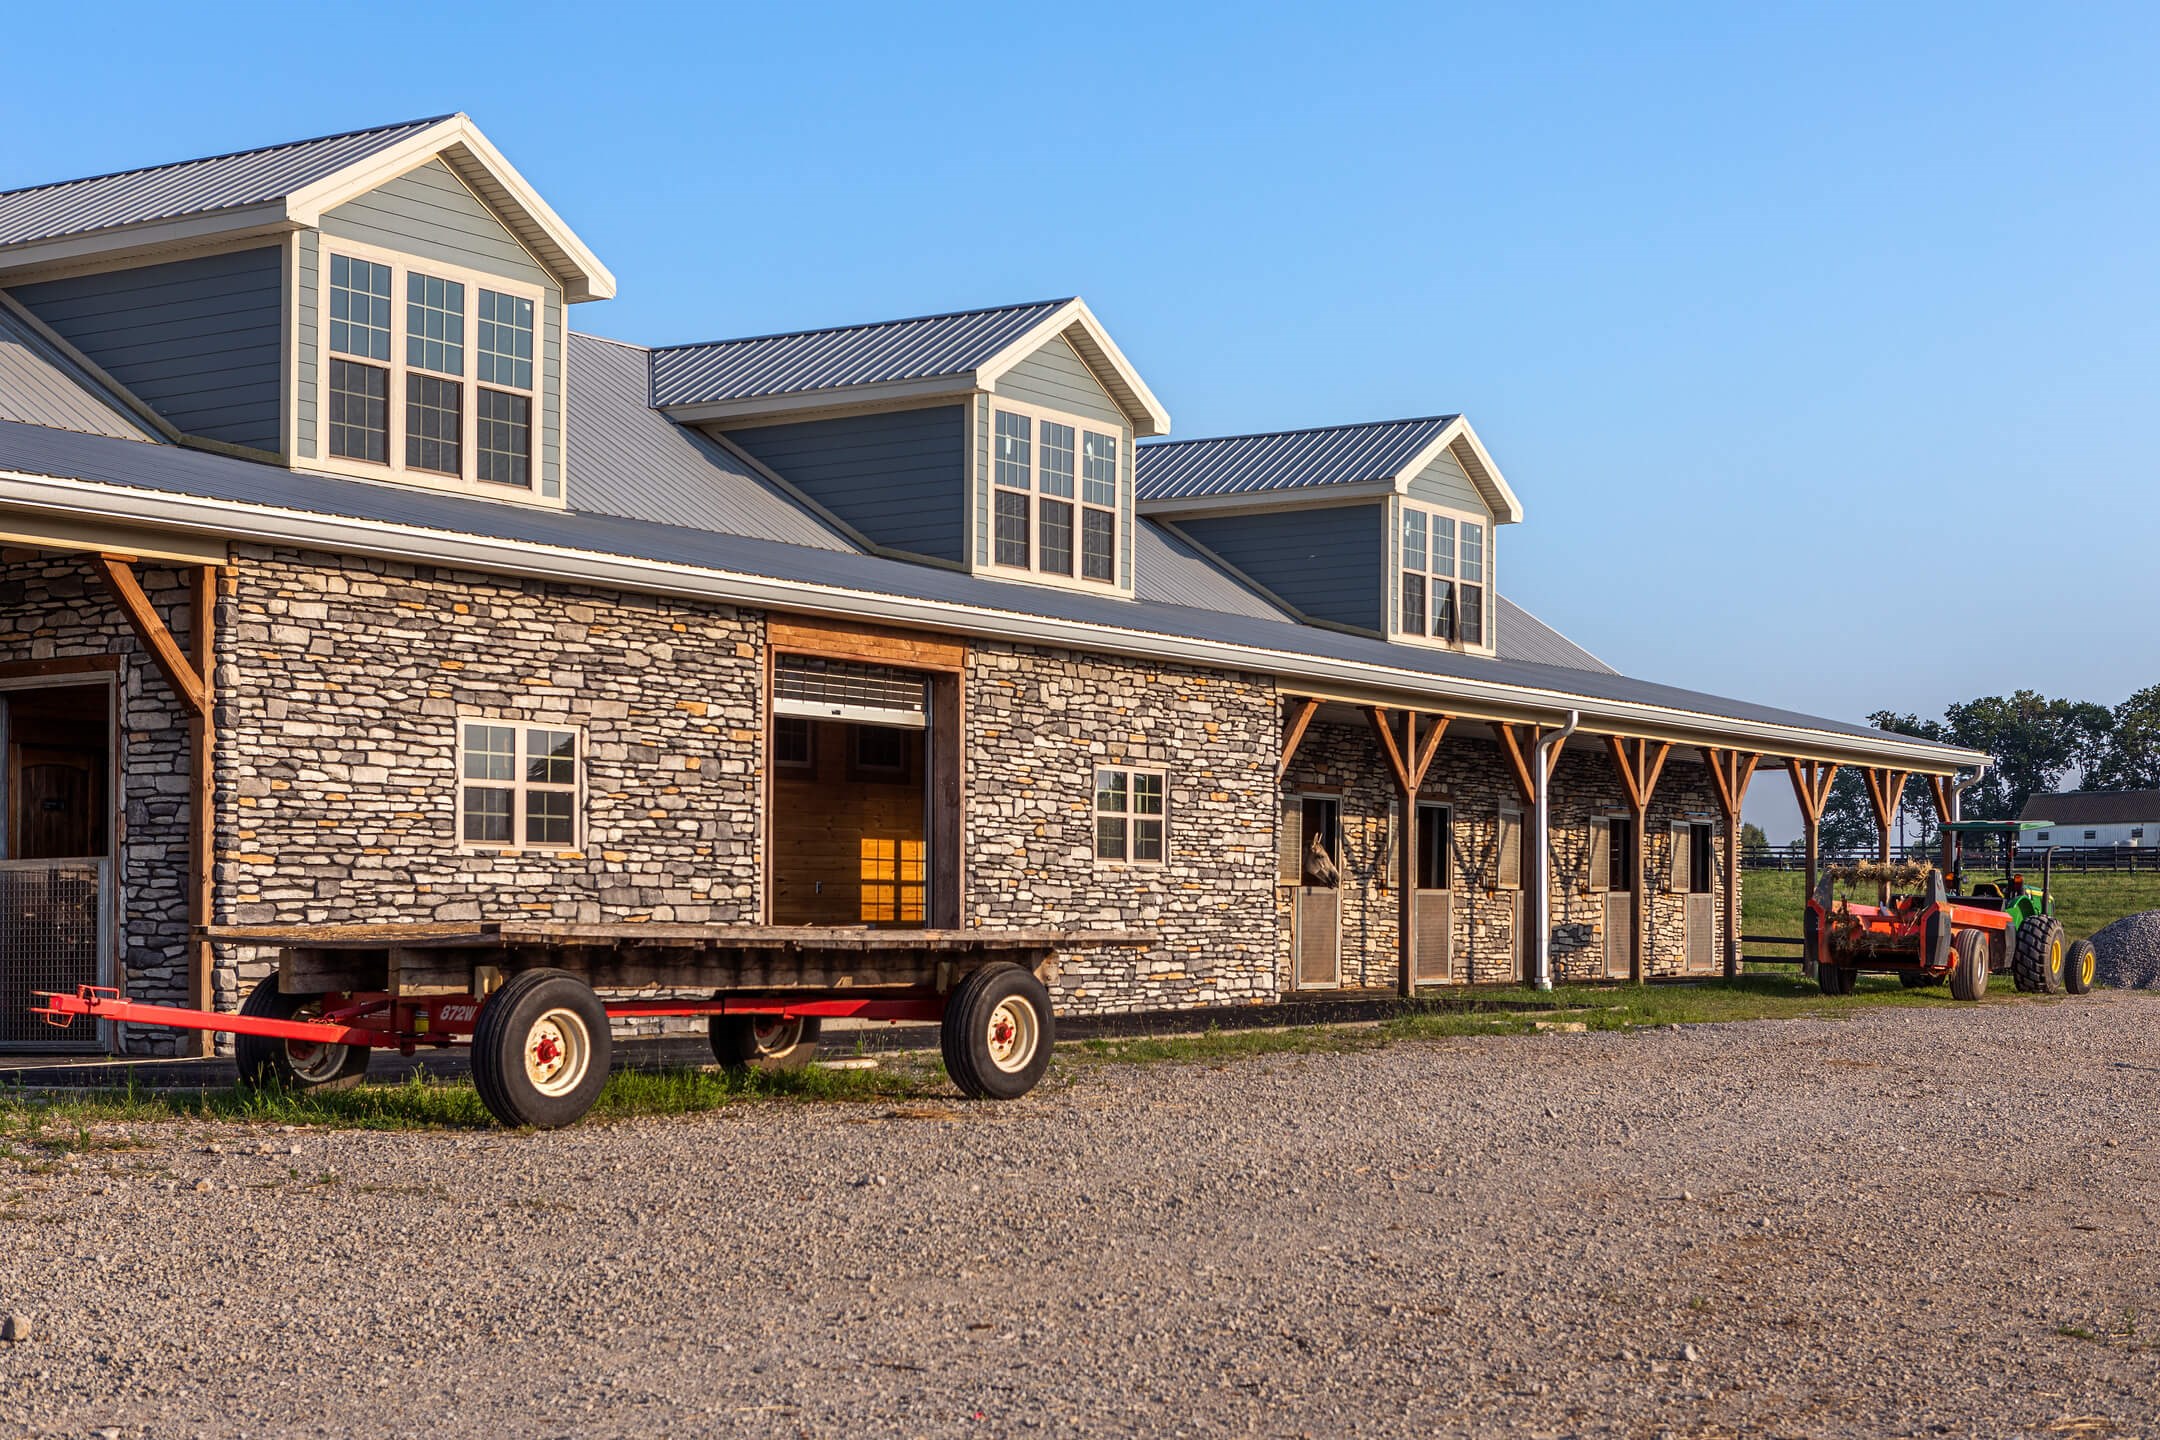 Glen-Gery | Ledgestone Kentucky Gray building stone veneer on exterior of horse barn